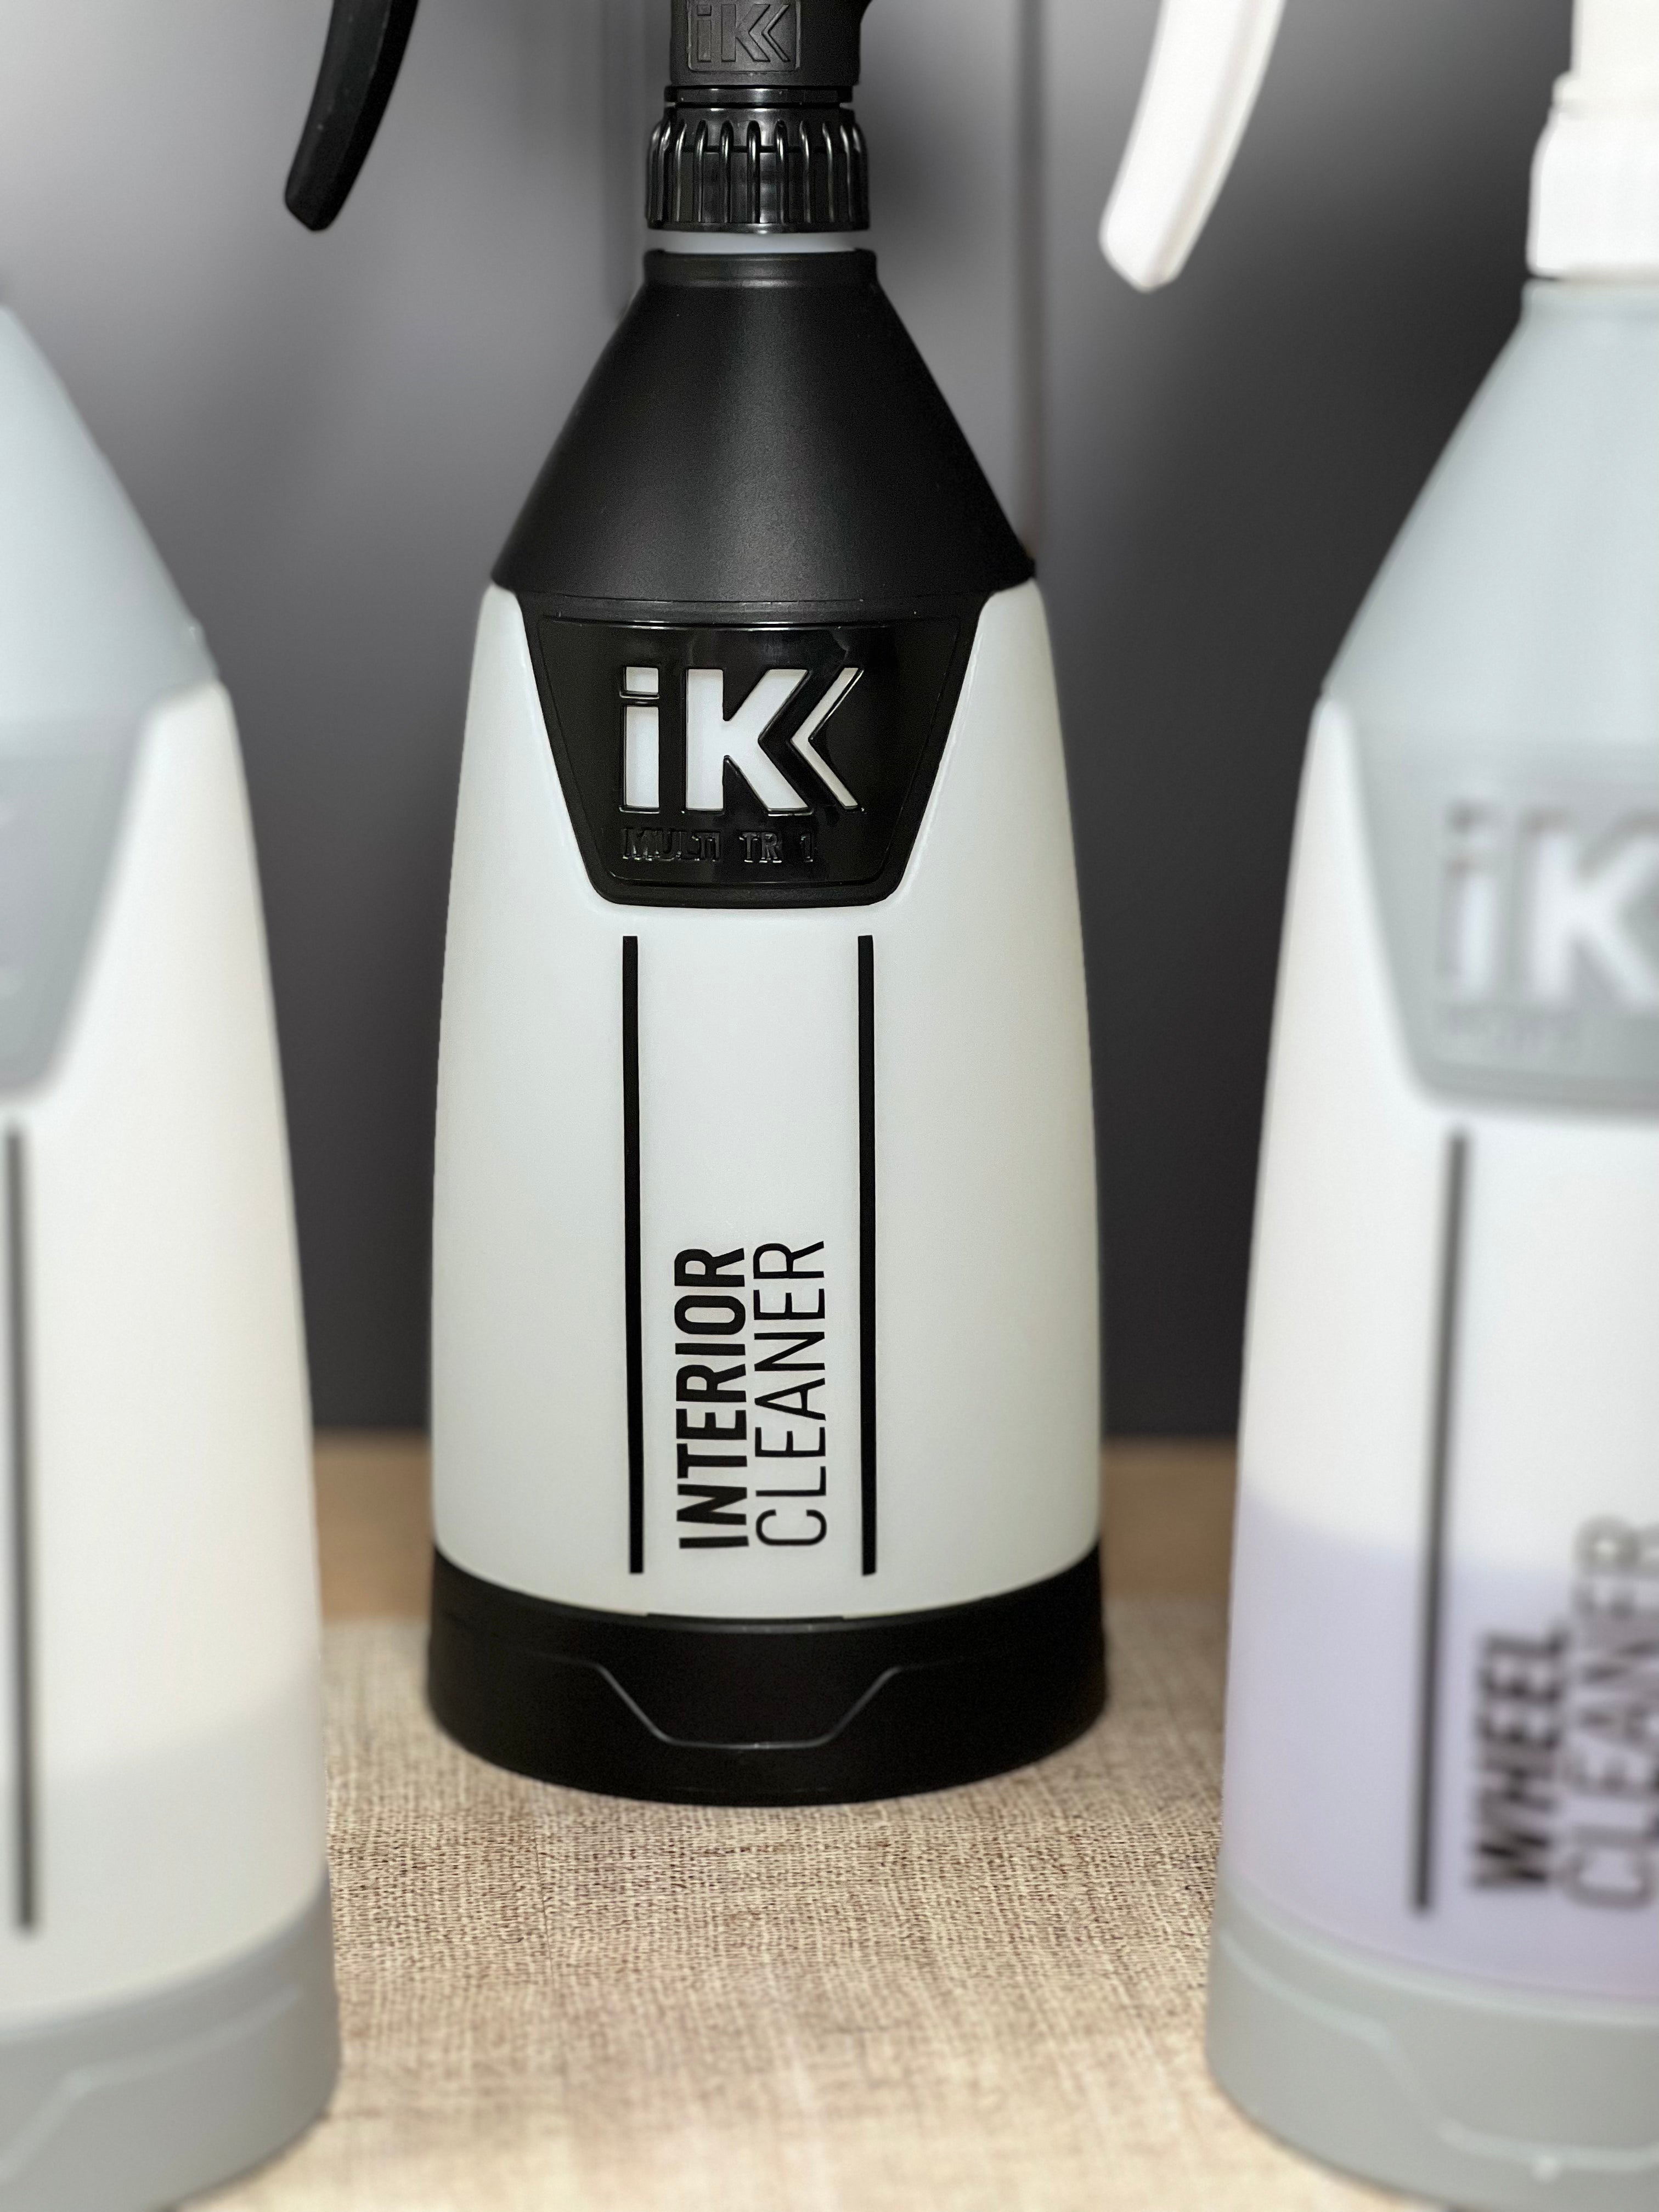 IK Sprayer Multi TR1 with Label